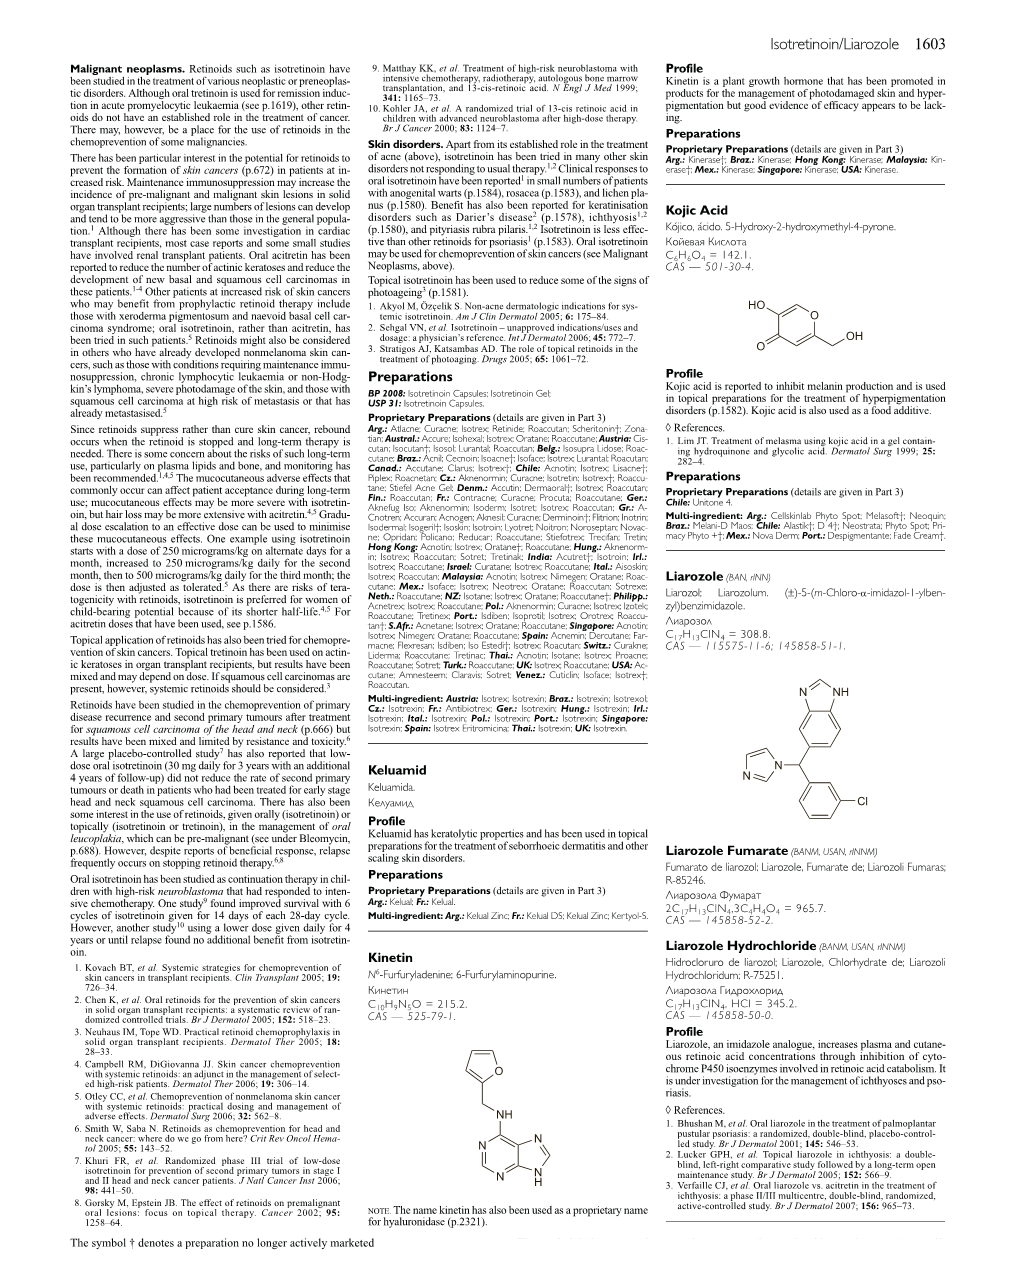 Liarozole Hydrochloride (BANM, USAN, Rinnm) Kinetin Hidrocloruro De Liarozol; Liarozole, Chlorhydrate De; Liarozoli 1